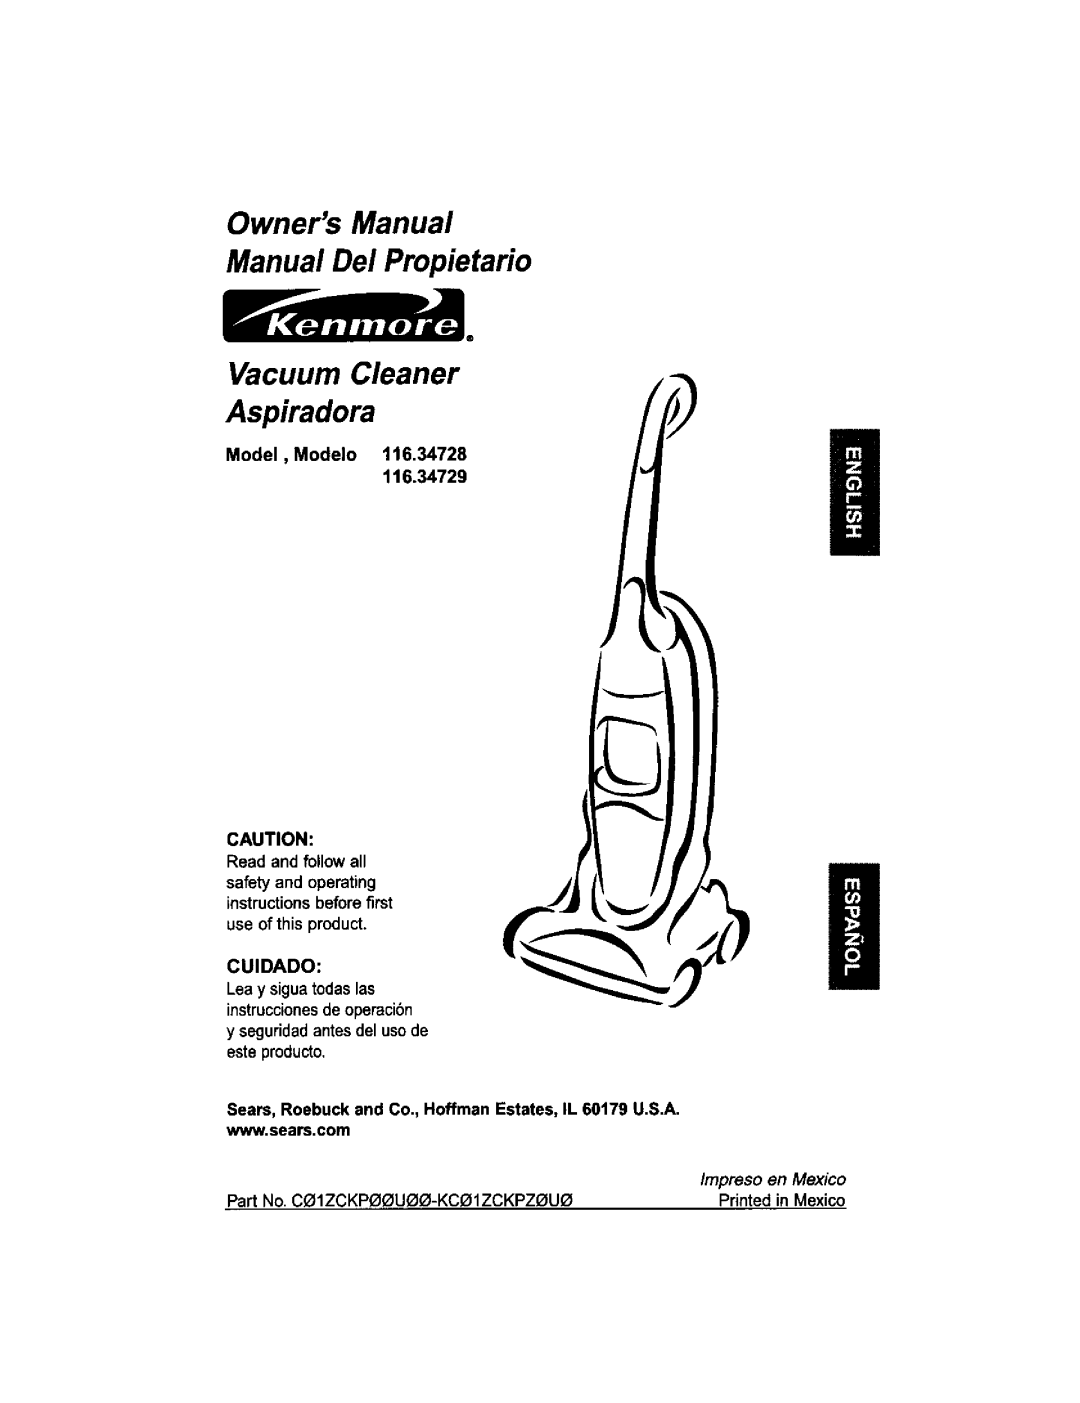 Kenmore 116.34729, 116.34728 owner manual Vacuum Cleaner Aspiradora, Impreso en Mexico, Part No. C01ZCKPO UOO-KCO1ZCKPZOU 